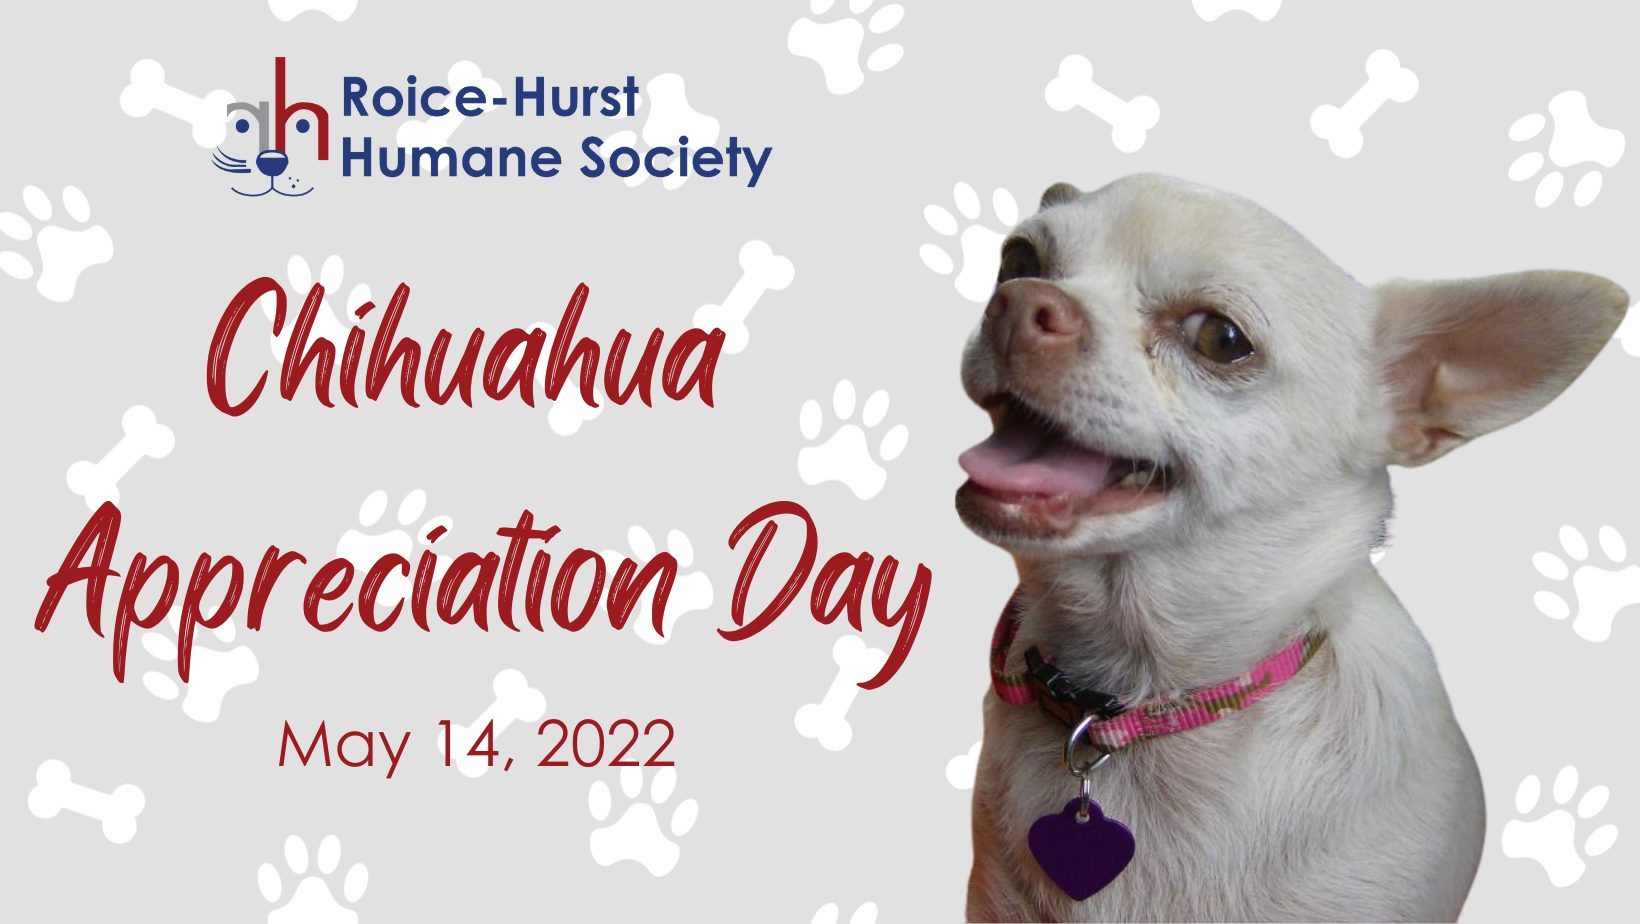 May 14 is International Chihuahua Appreciation Day!